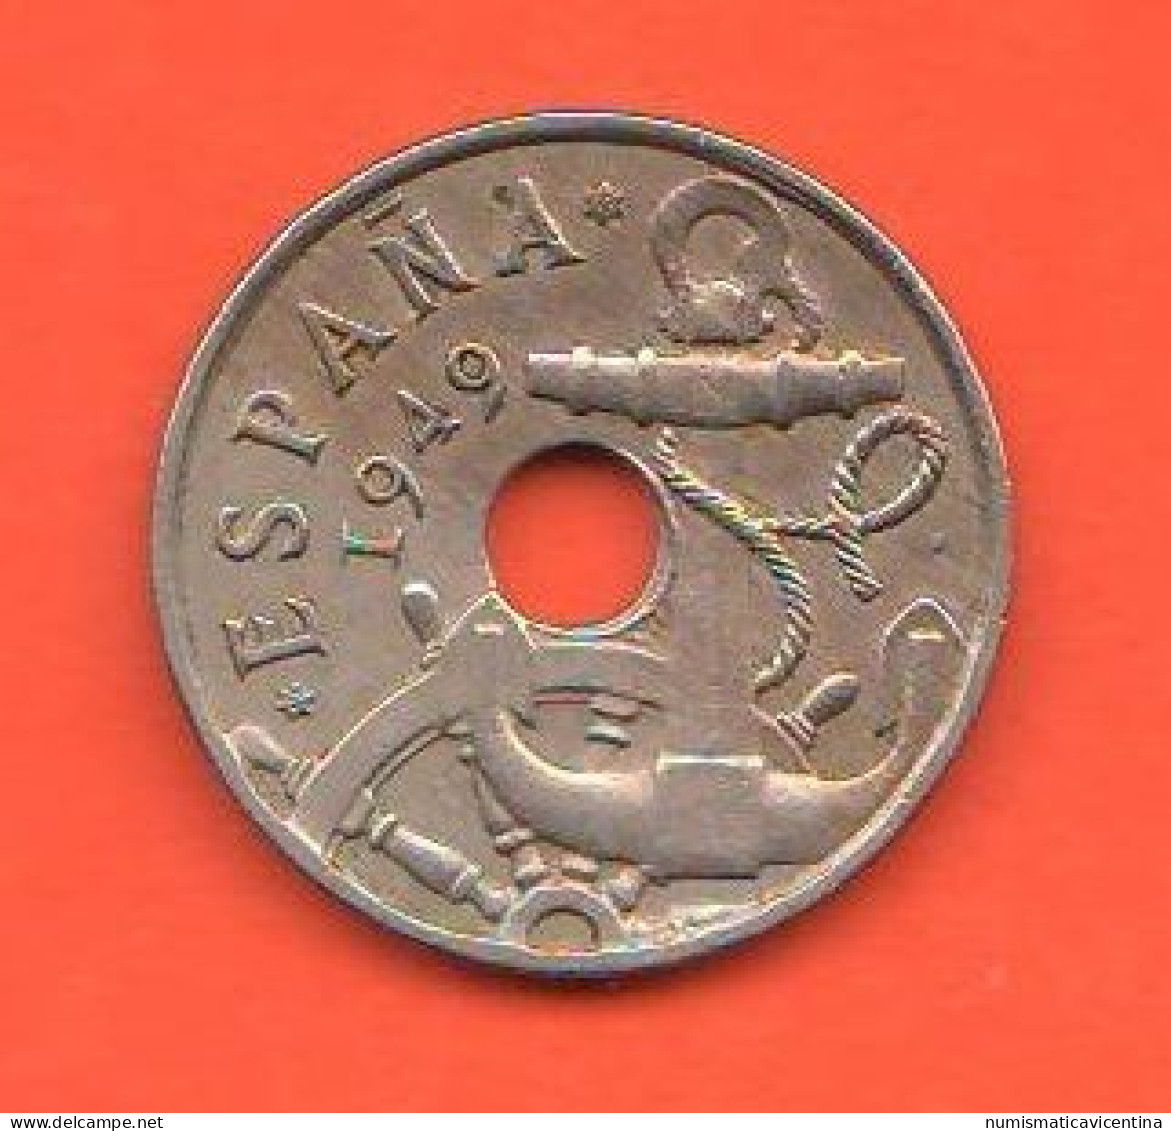 Spagna 50 Centimos 1949  (1953 In The Star ) Spain España Nickel Coin - 50 Céntimos